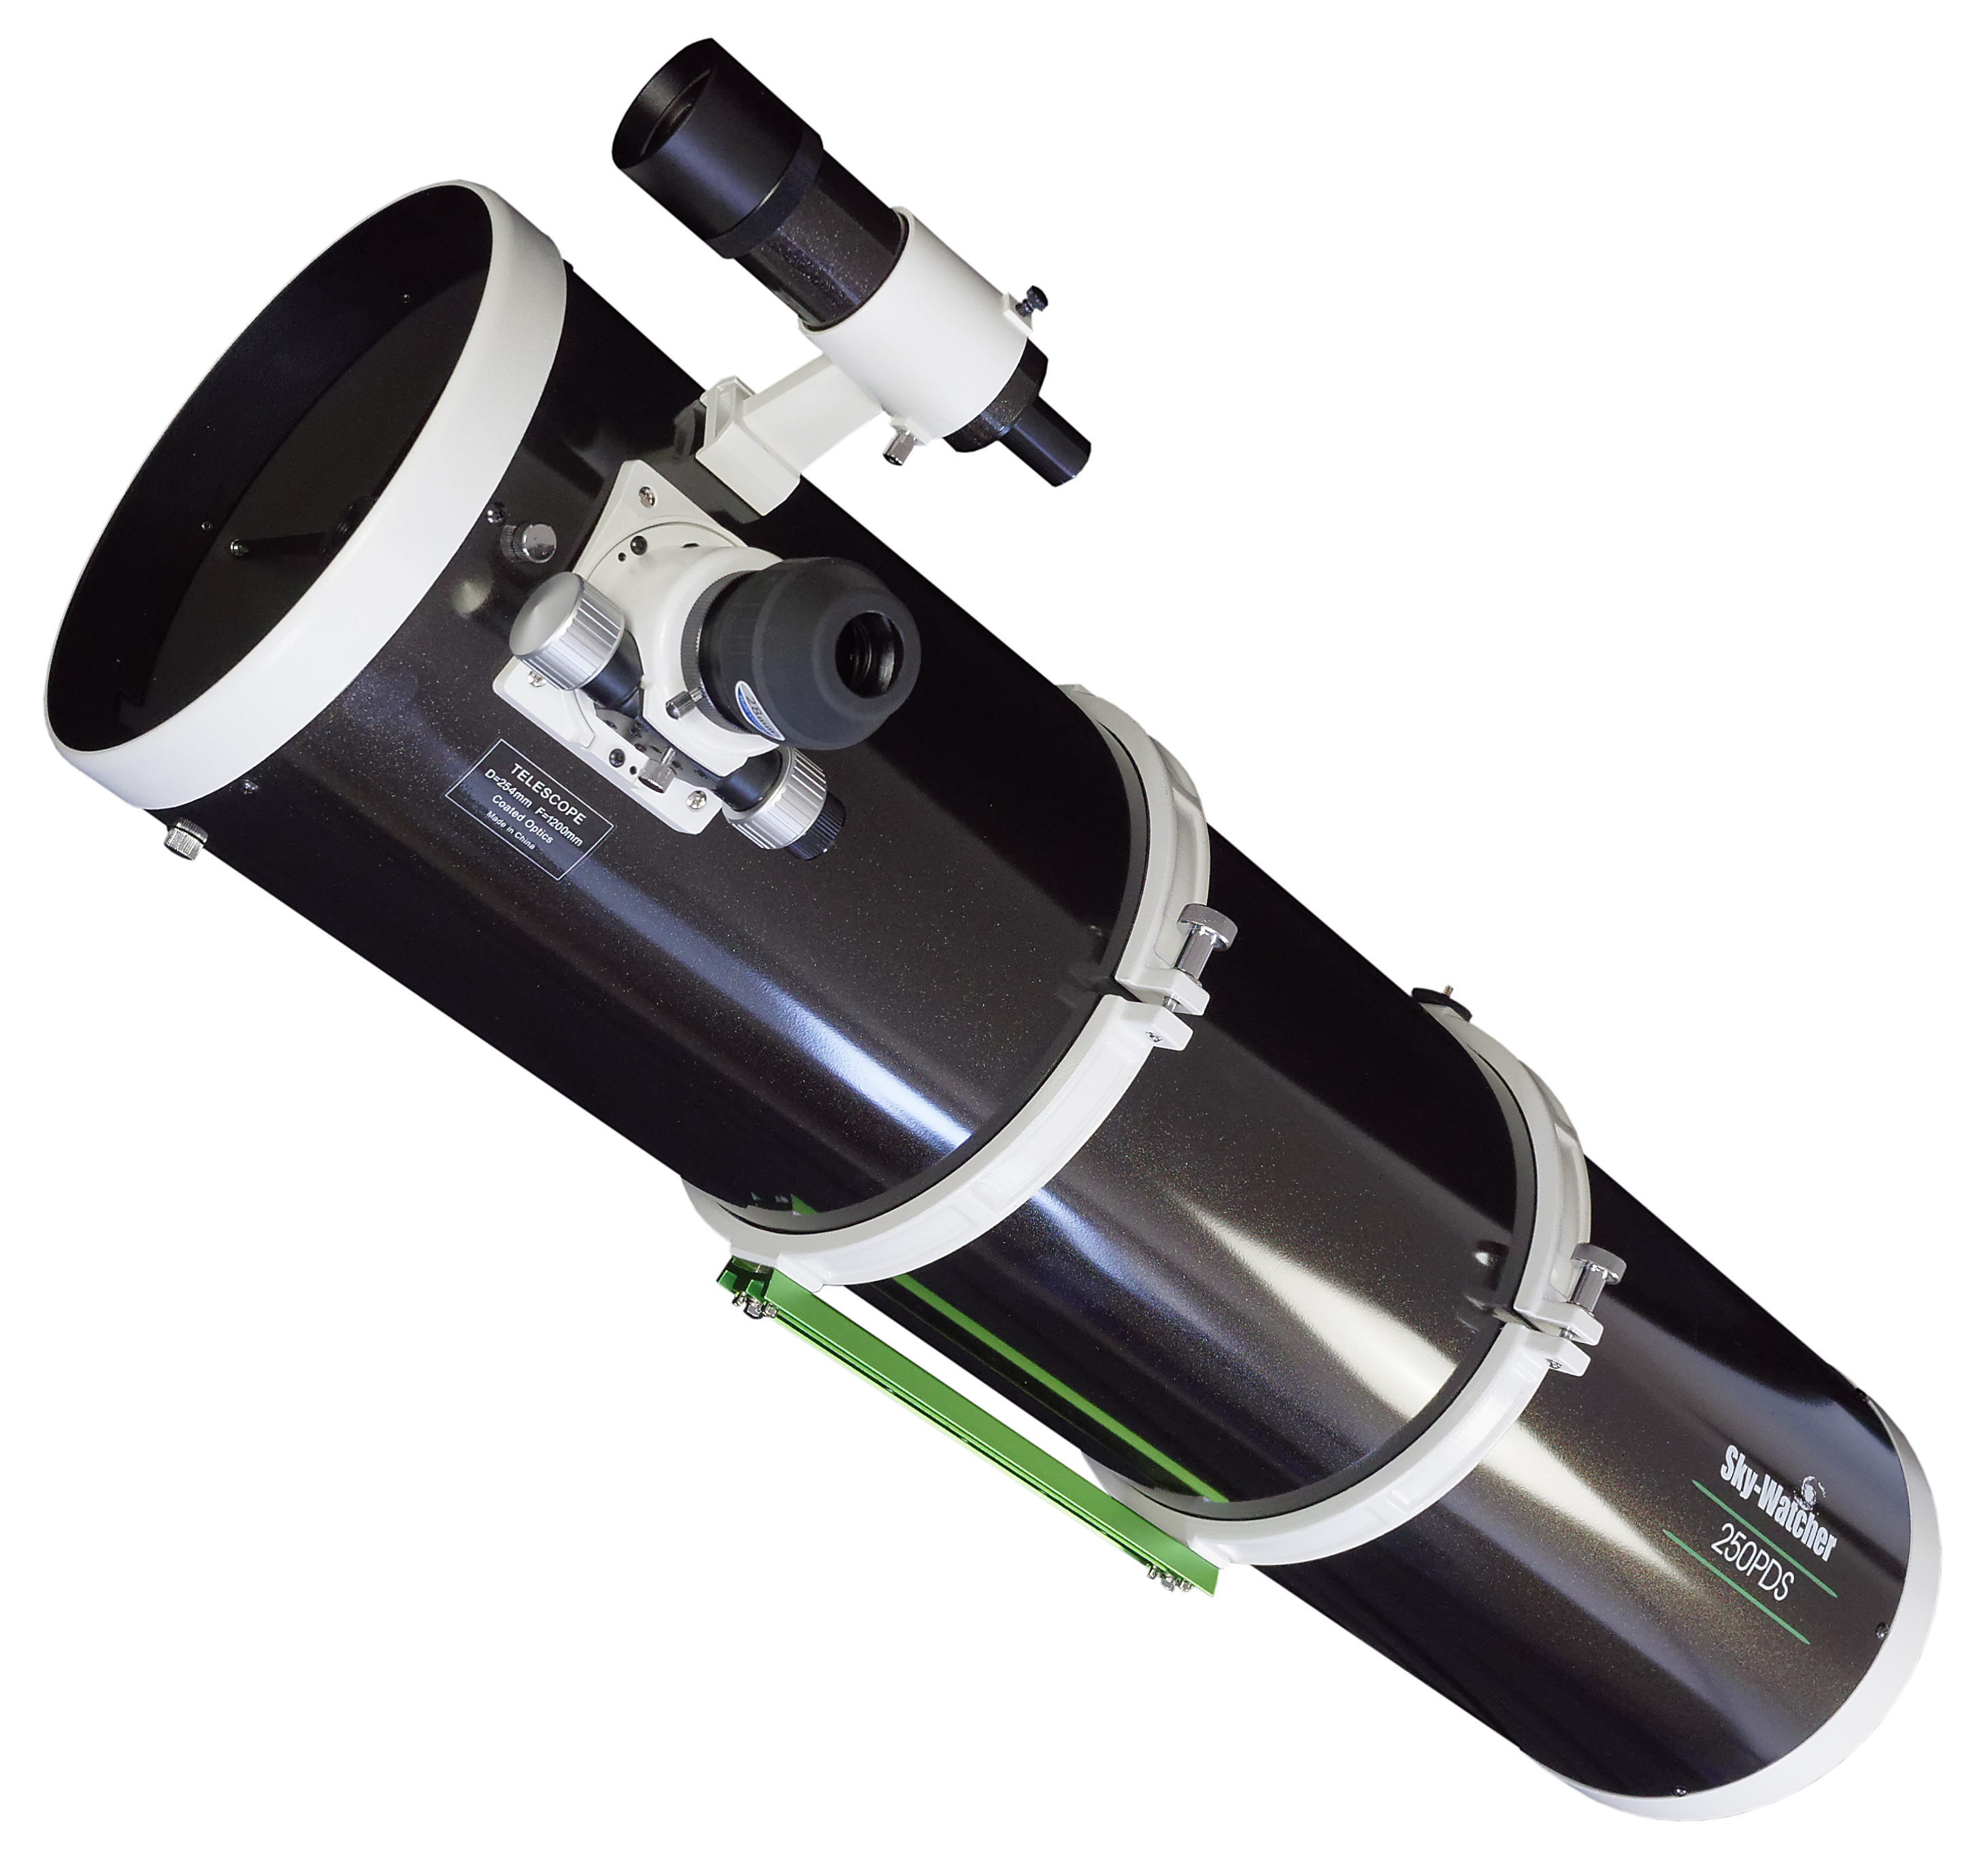   Tubo ottico riflettore newton Black Diamond 250/1200 + AE Collimation tool Easy Sky Watcher  